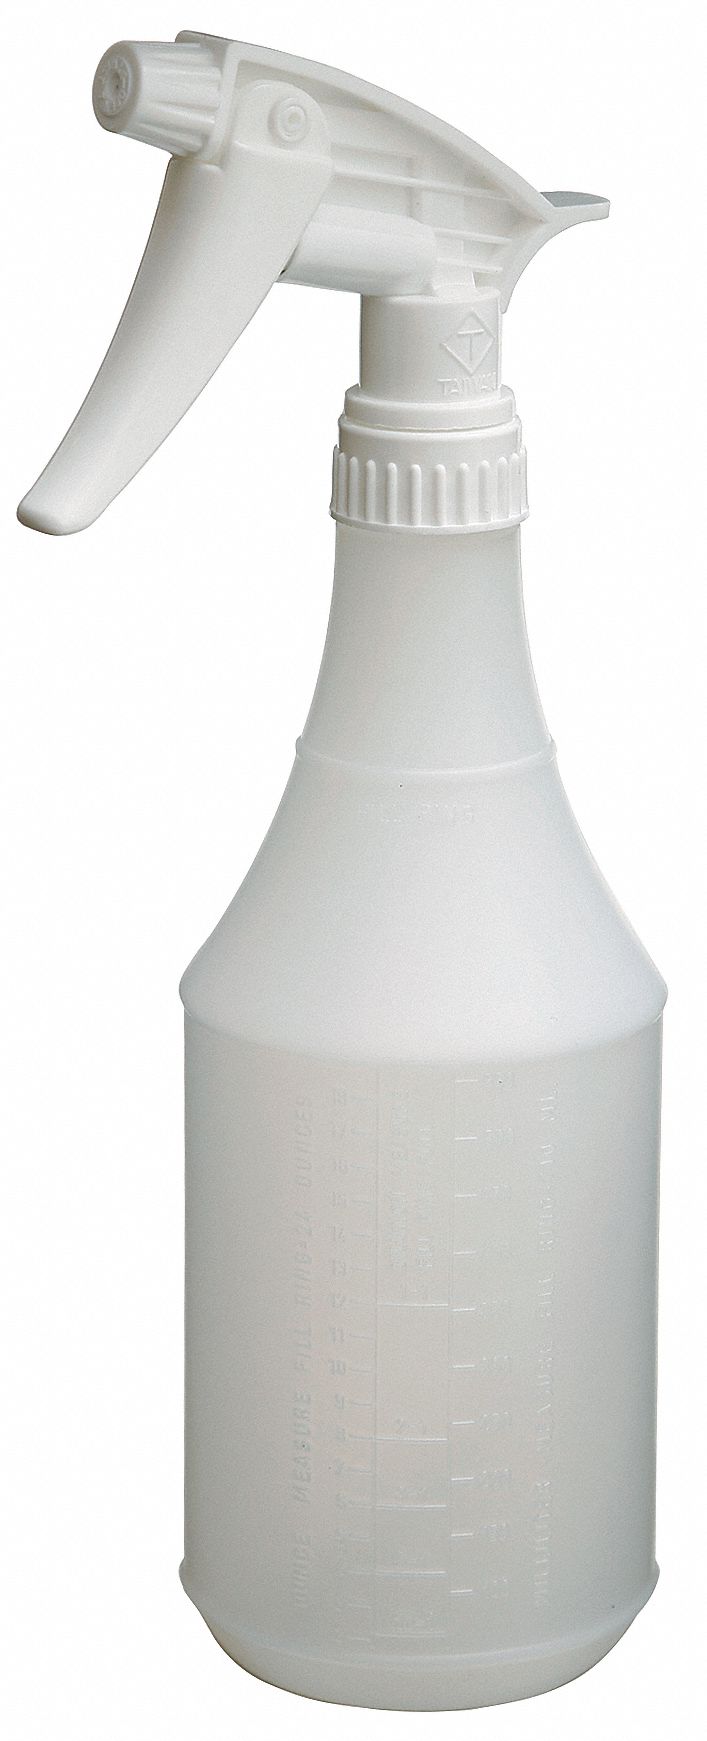 SKILCRAFT Spray Bottle 24 Oz. Pack Of 3 AbilityOne 8125 01 577 0210 -  Office Depot